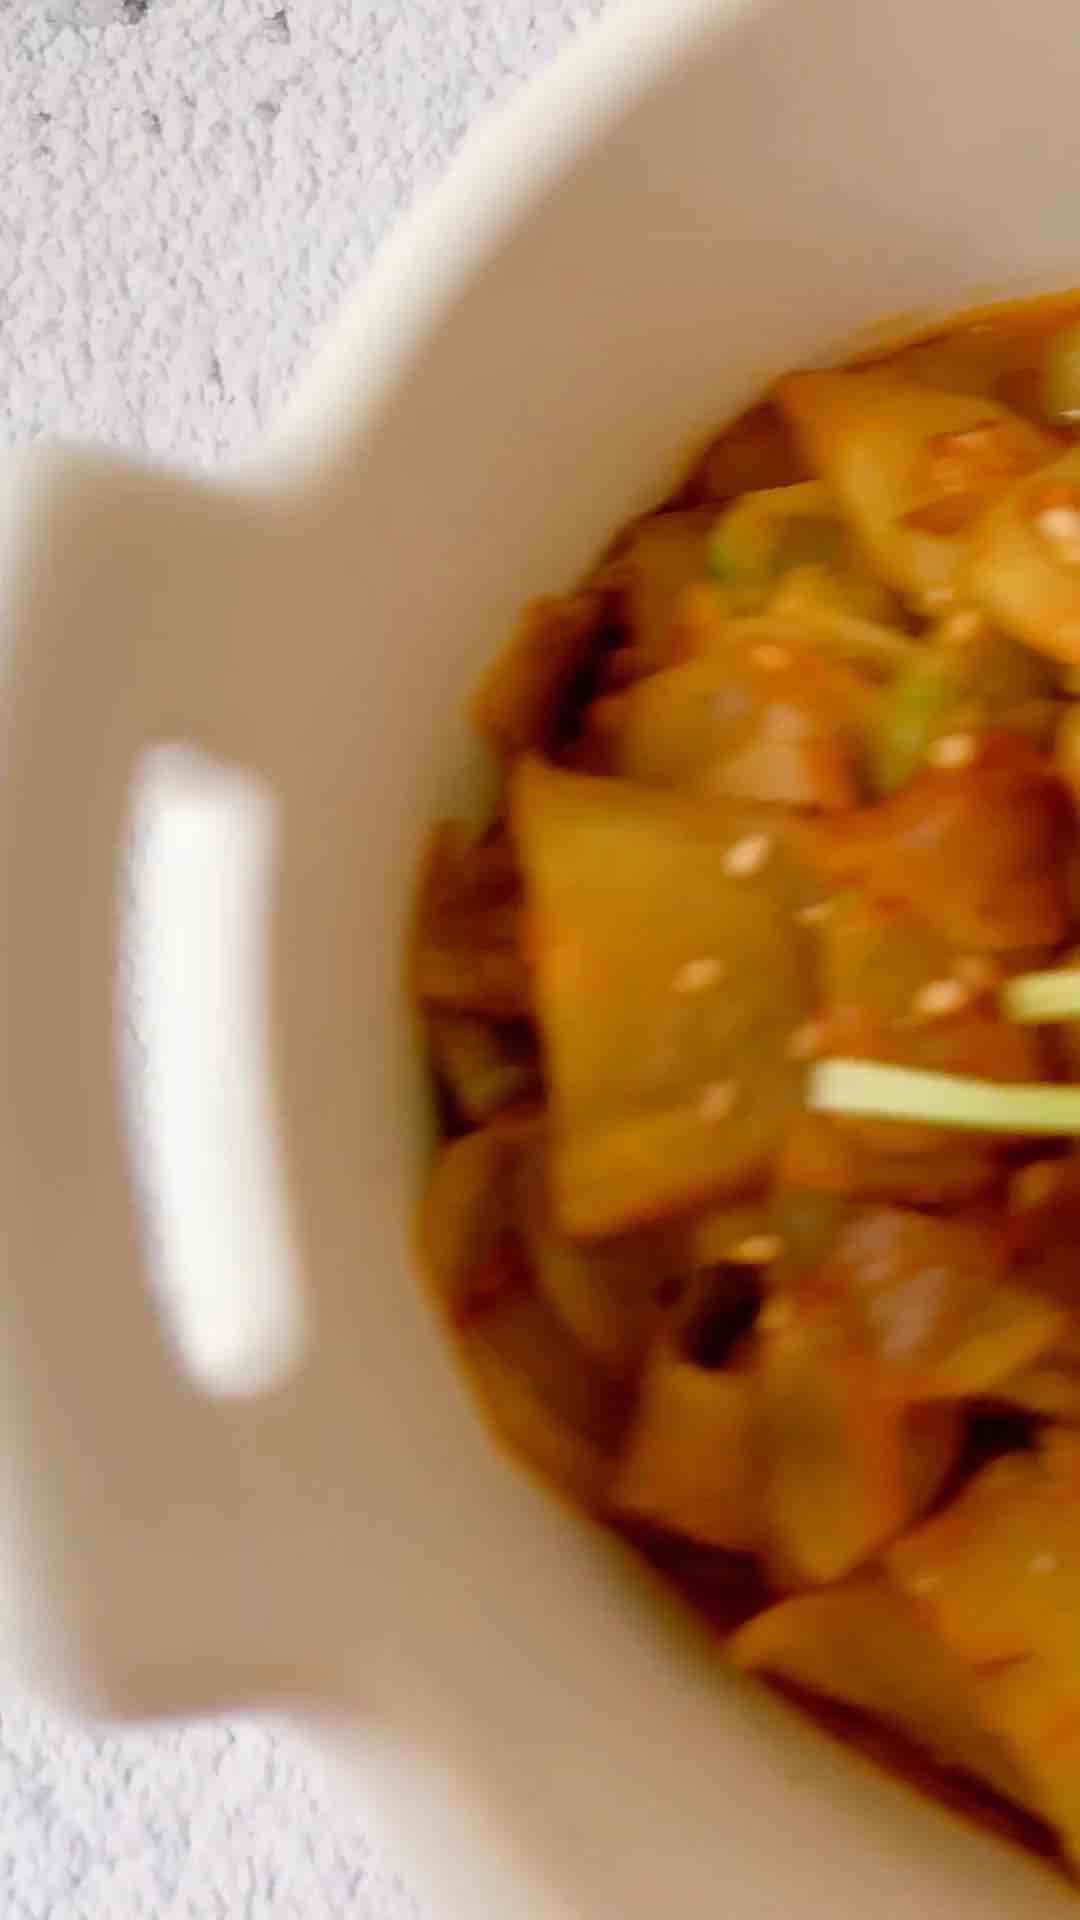 Stir-fried Vegetable with Pleurotus Eryngii Shrimp, Clam Sauce recipe